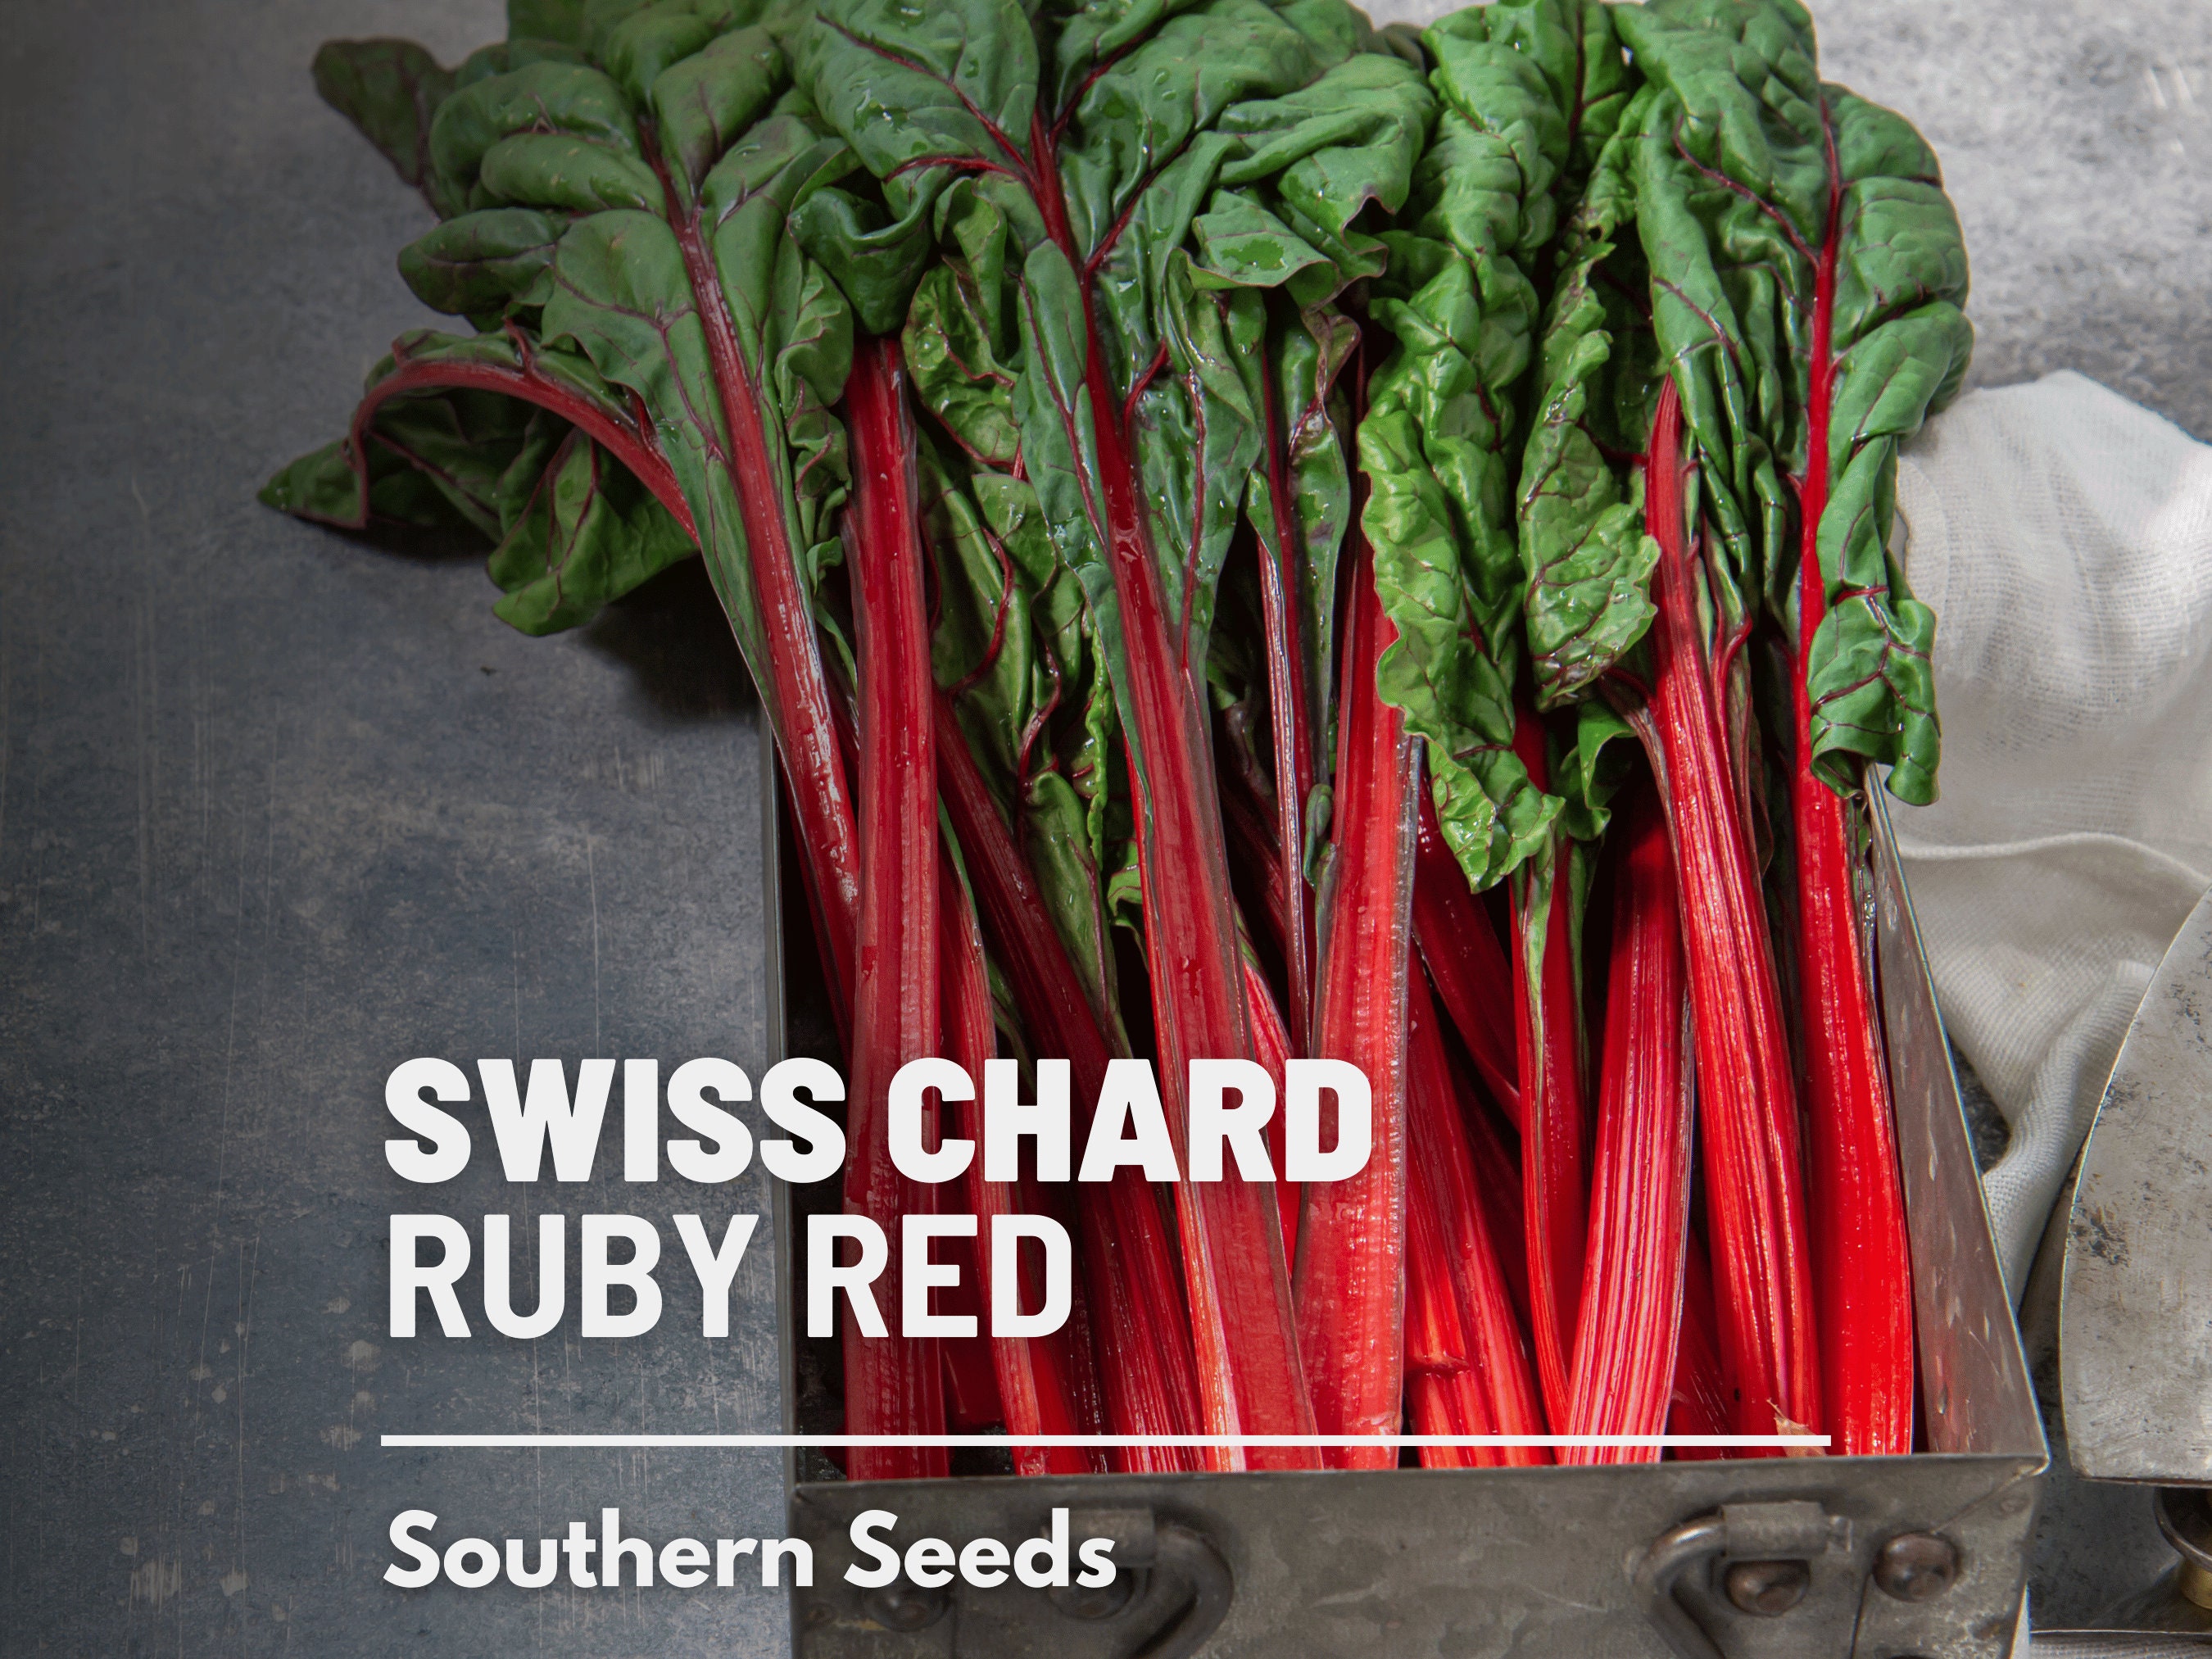 Ruby Red Rhubarb Swiss Chard Seeds